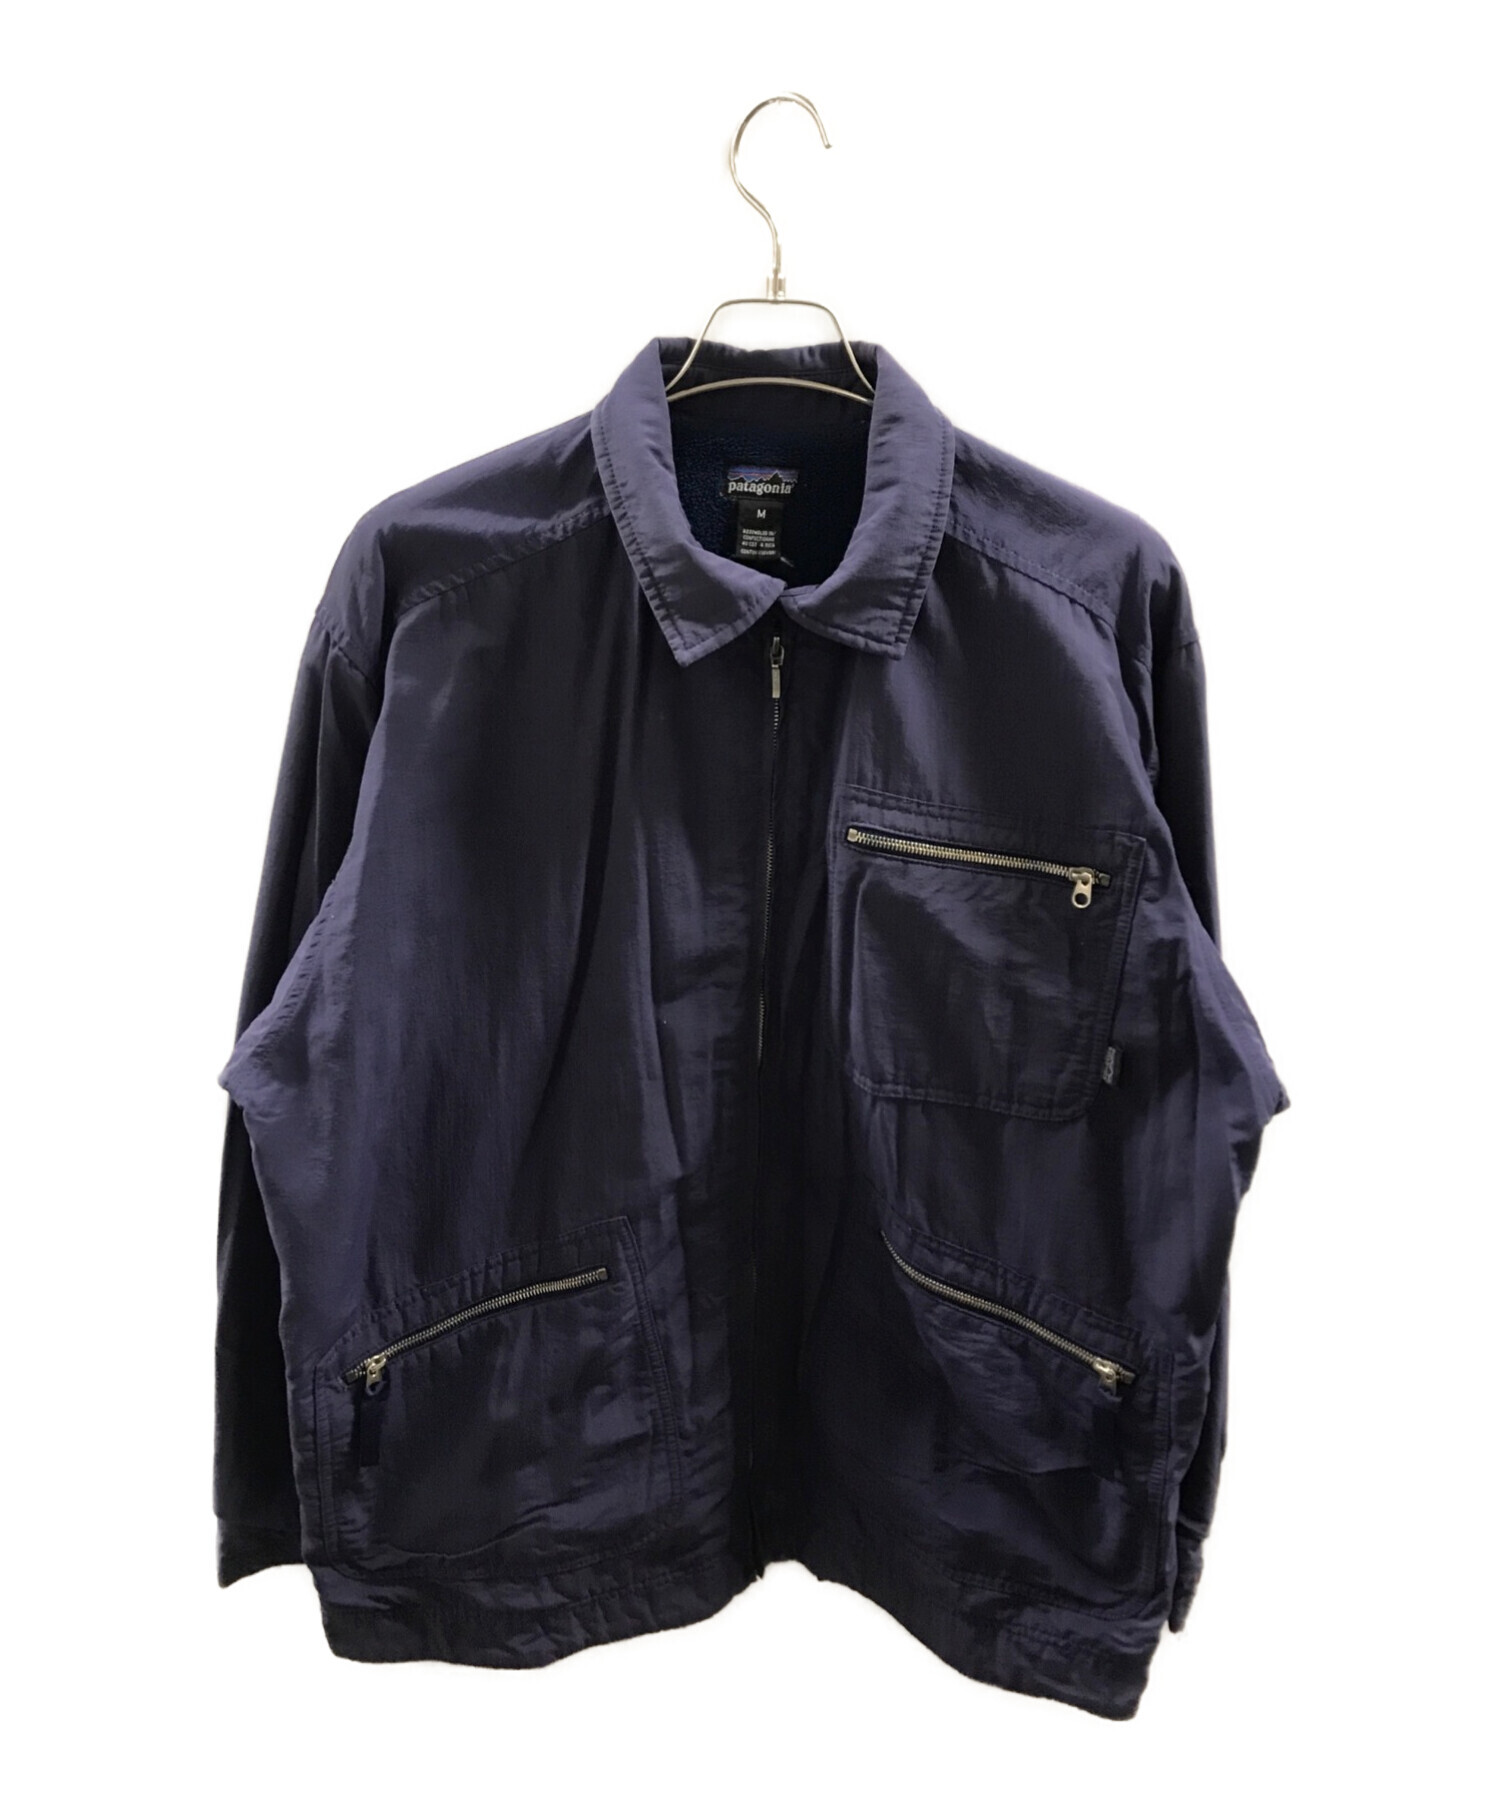 90's  patagonia cap de ville jacket レアサイズは希少なXL